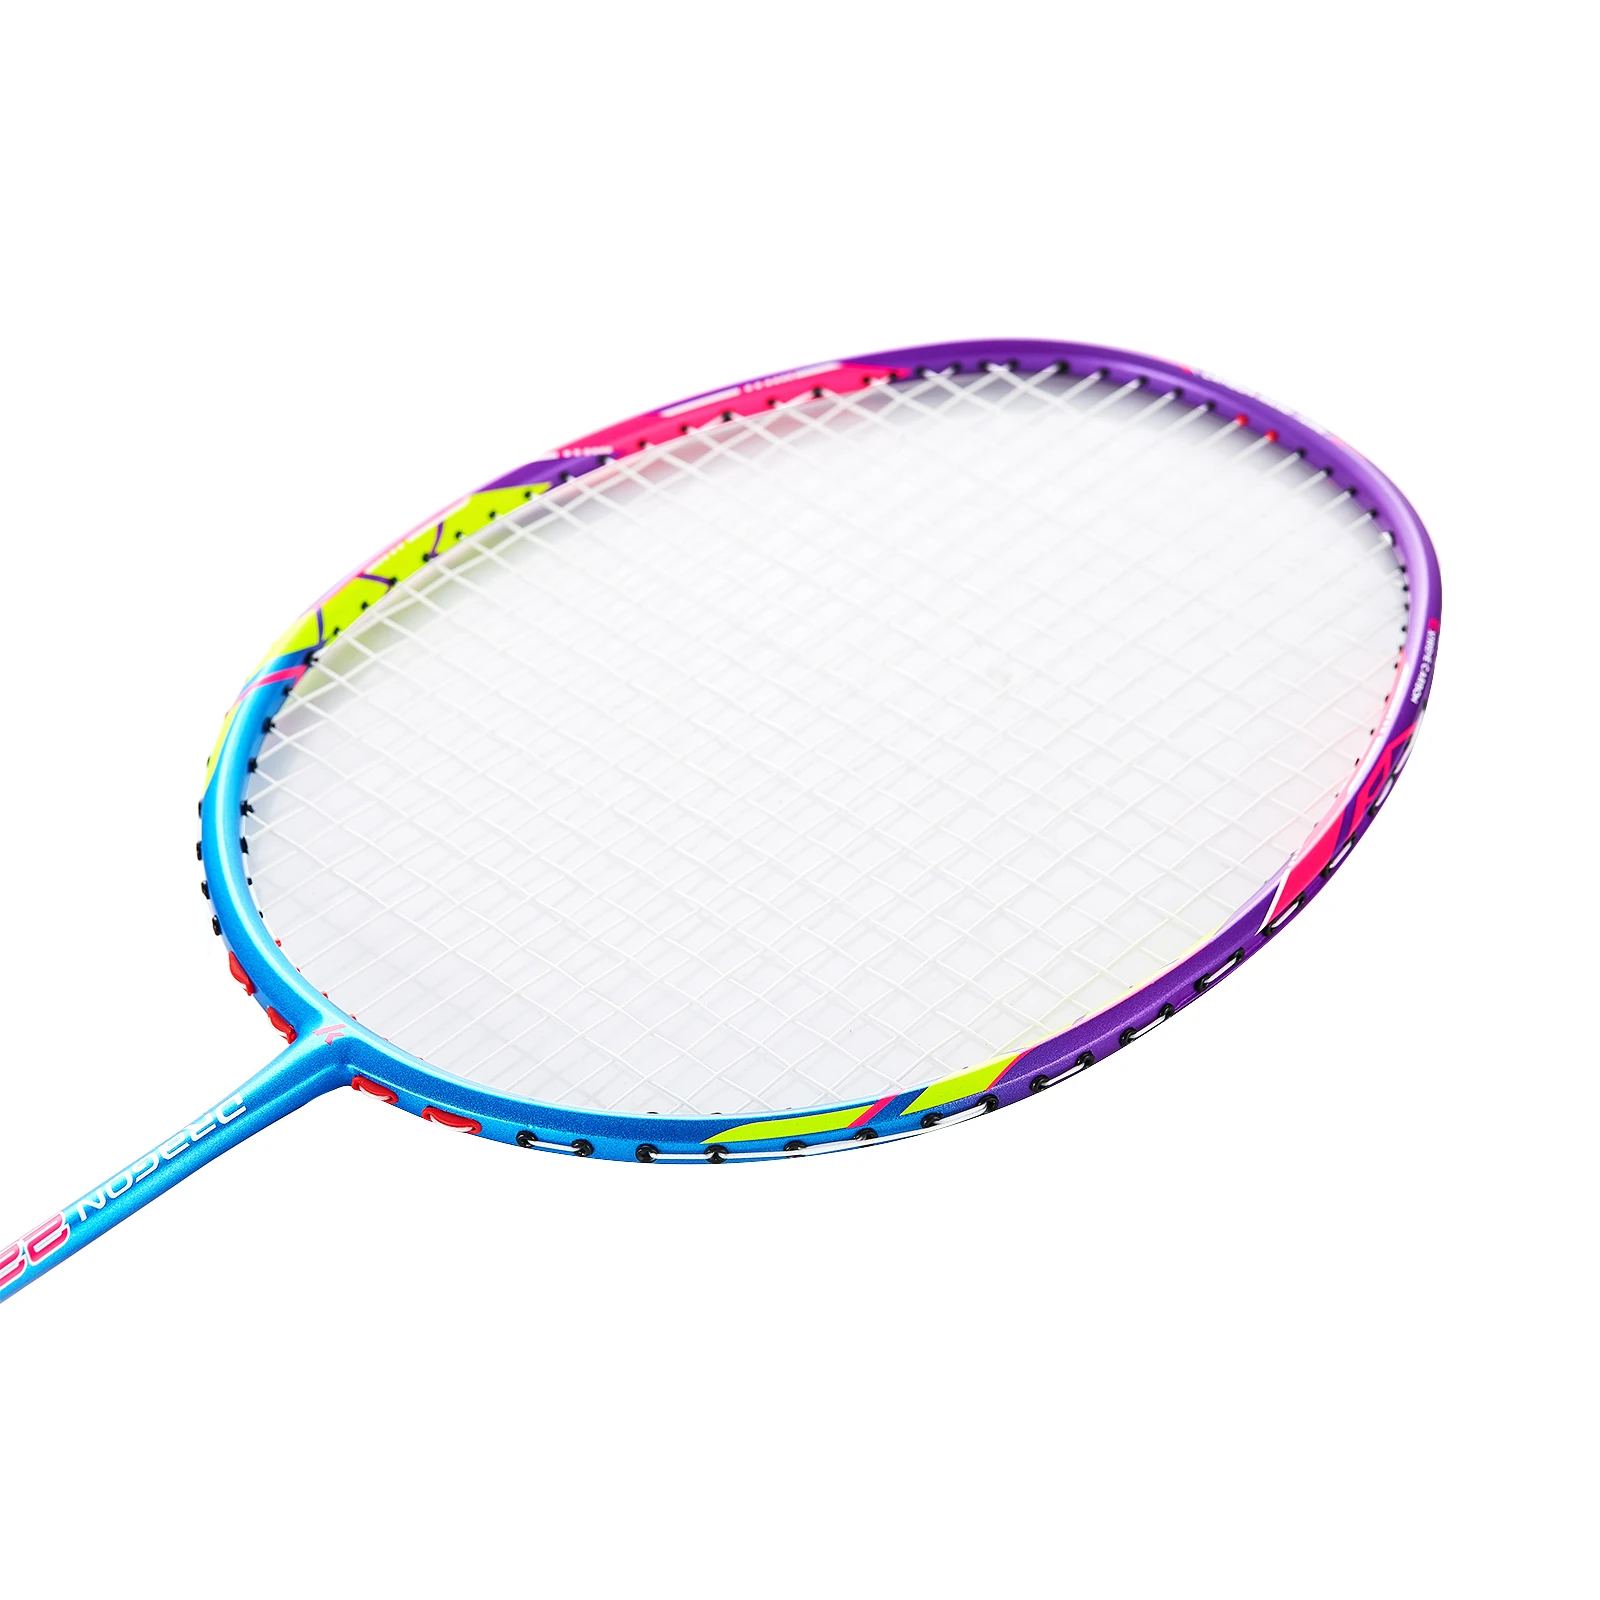 Kawasaki Badminton Racket Professional Super Light Offensive Type High Graphite Badminton Racquet For Training Dragon 222/232